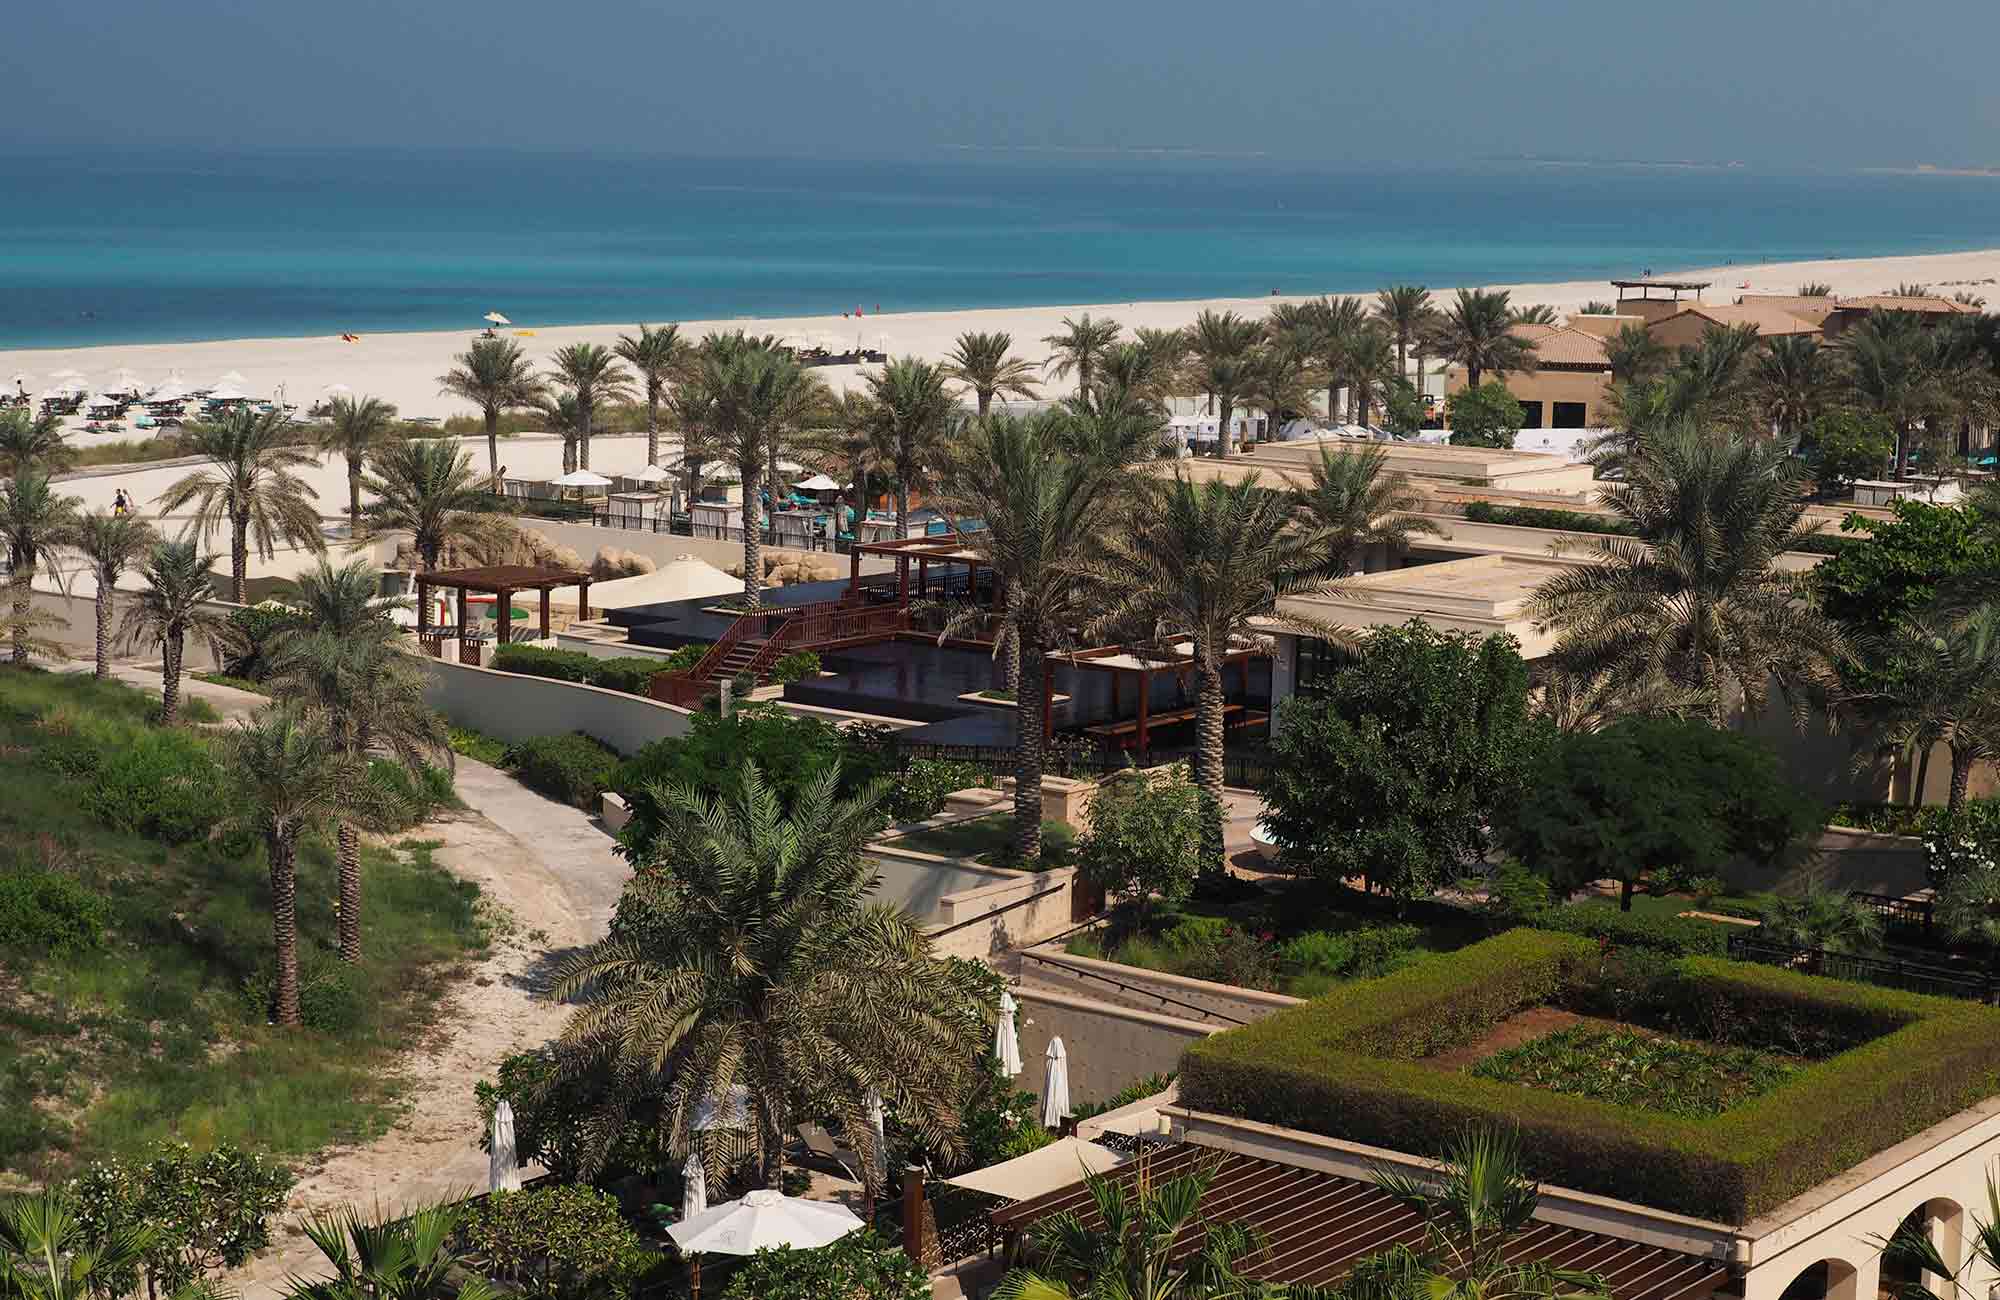 Voyage Abu Dhabi - Hôtel St Régis - Amplitudes